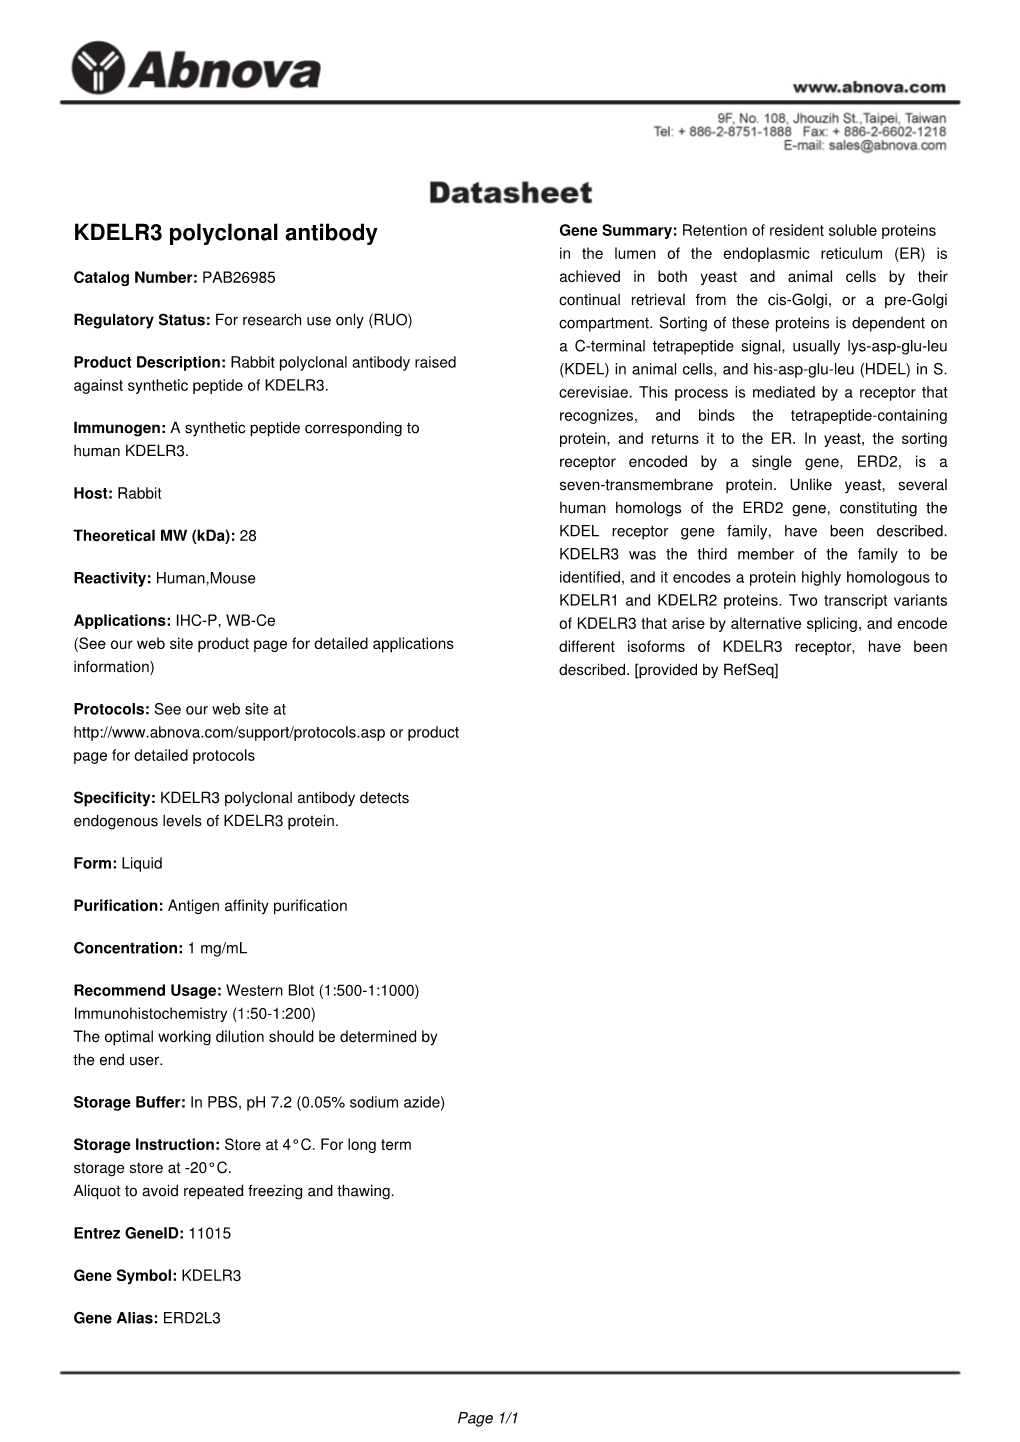 KDELR3 Polyclonal Antibody